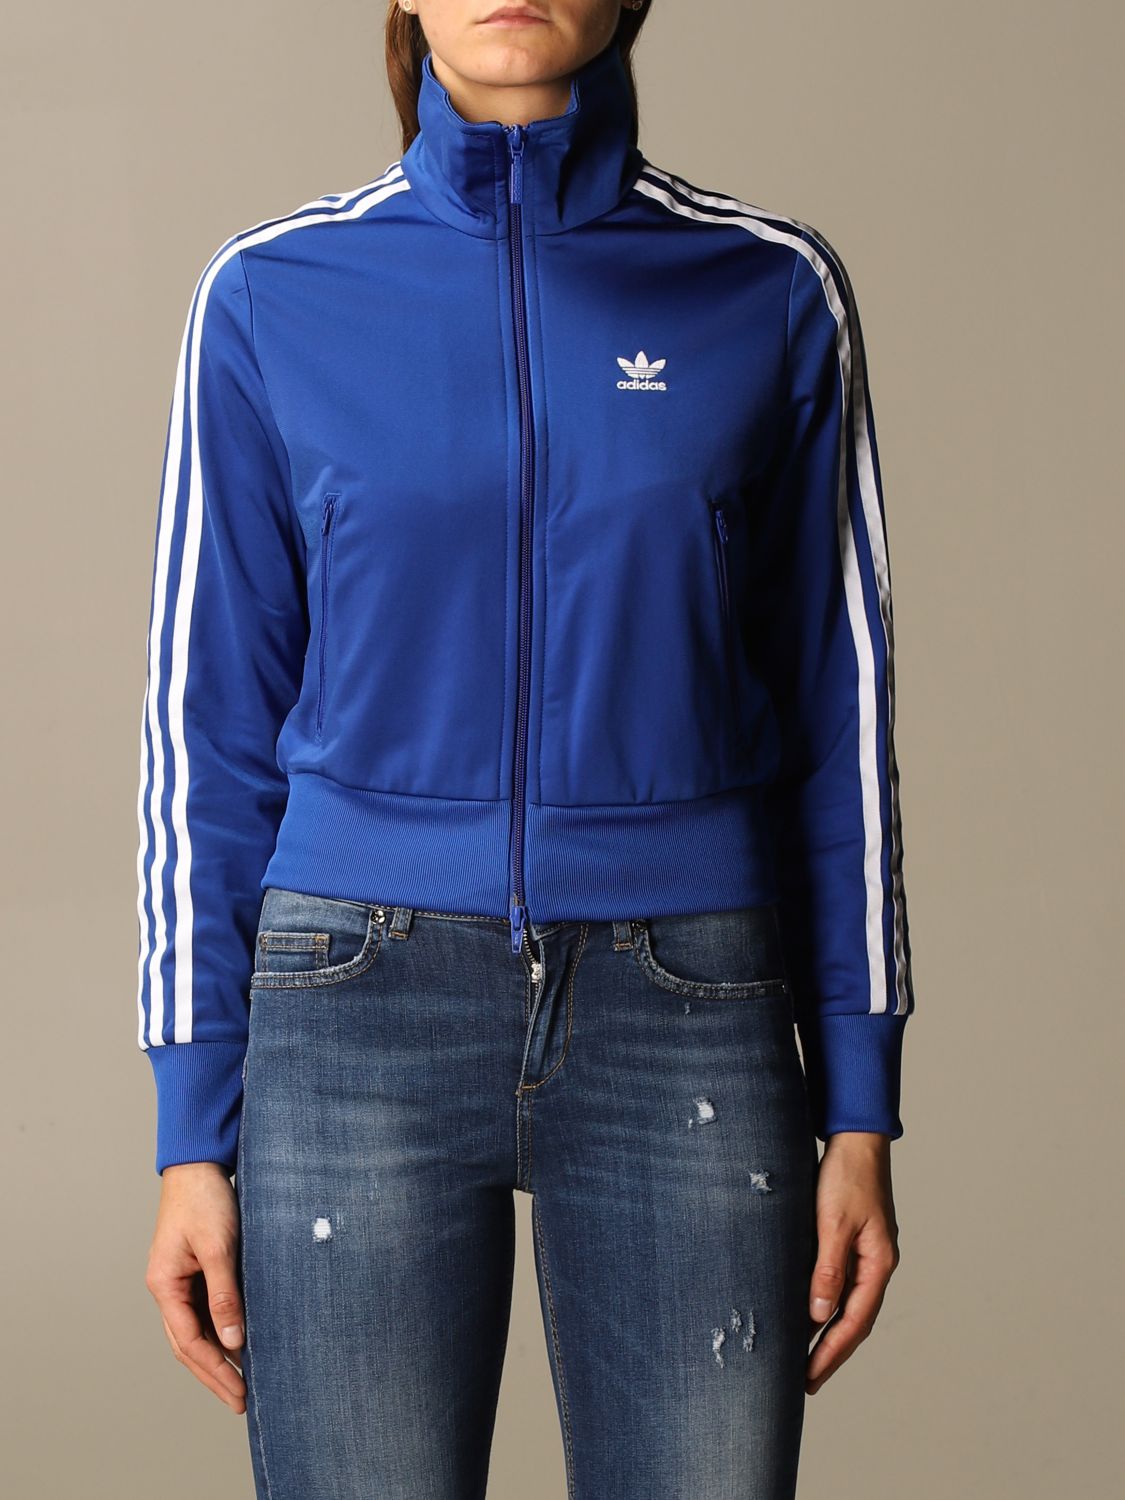 woensdag spontaan hebben ADIDAS ORIGINALS: Damen Sweatshirt - Blau | Adidas Originals Sweatshirt  GD2372 online auf GIGLIO.COM